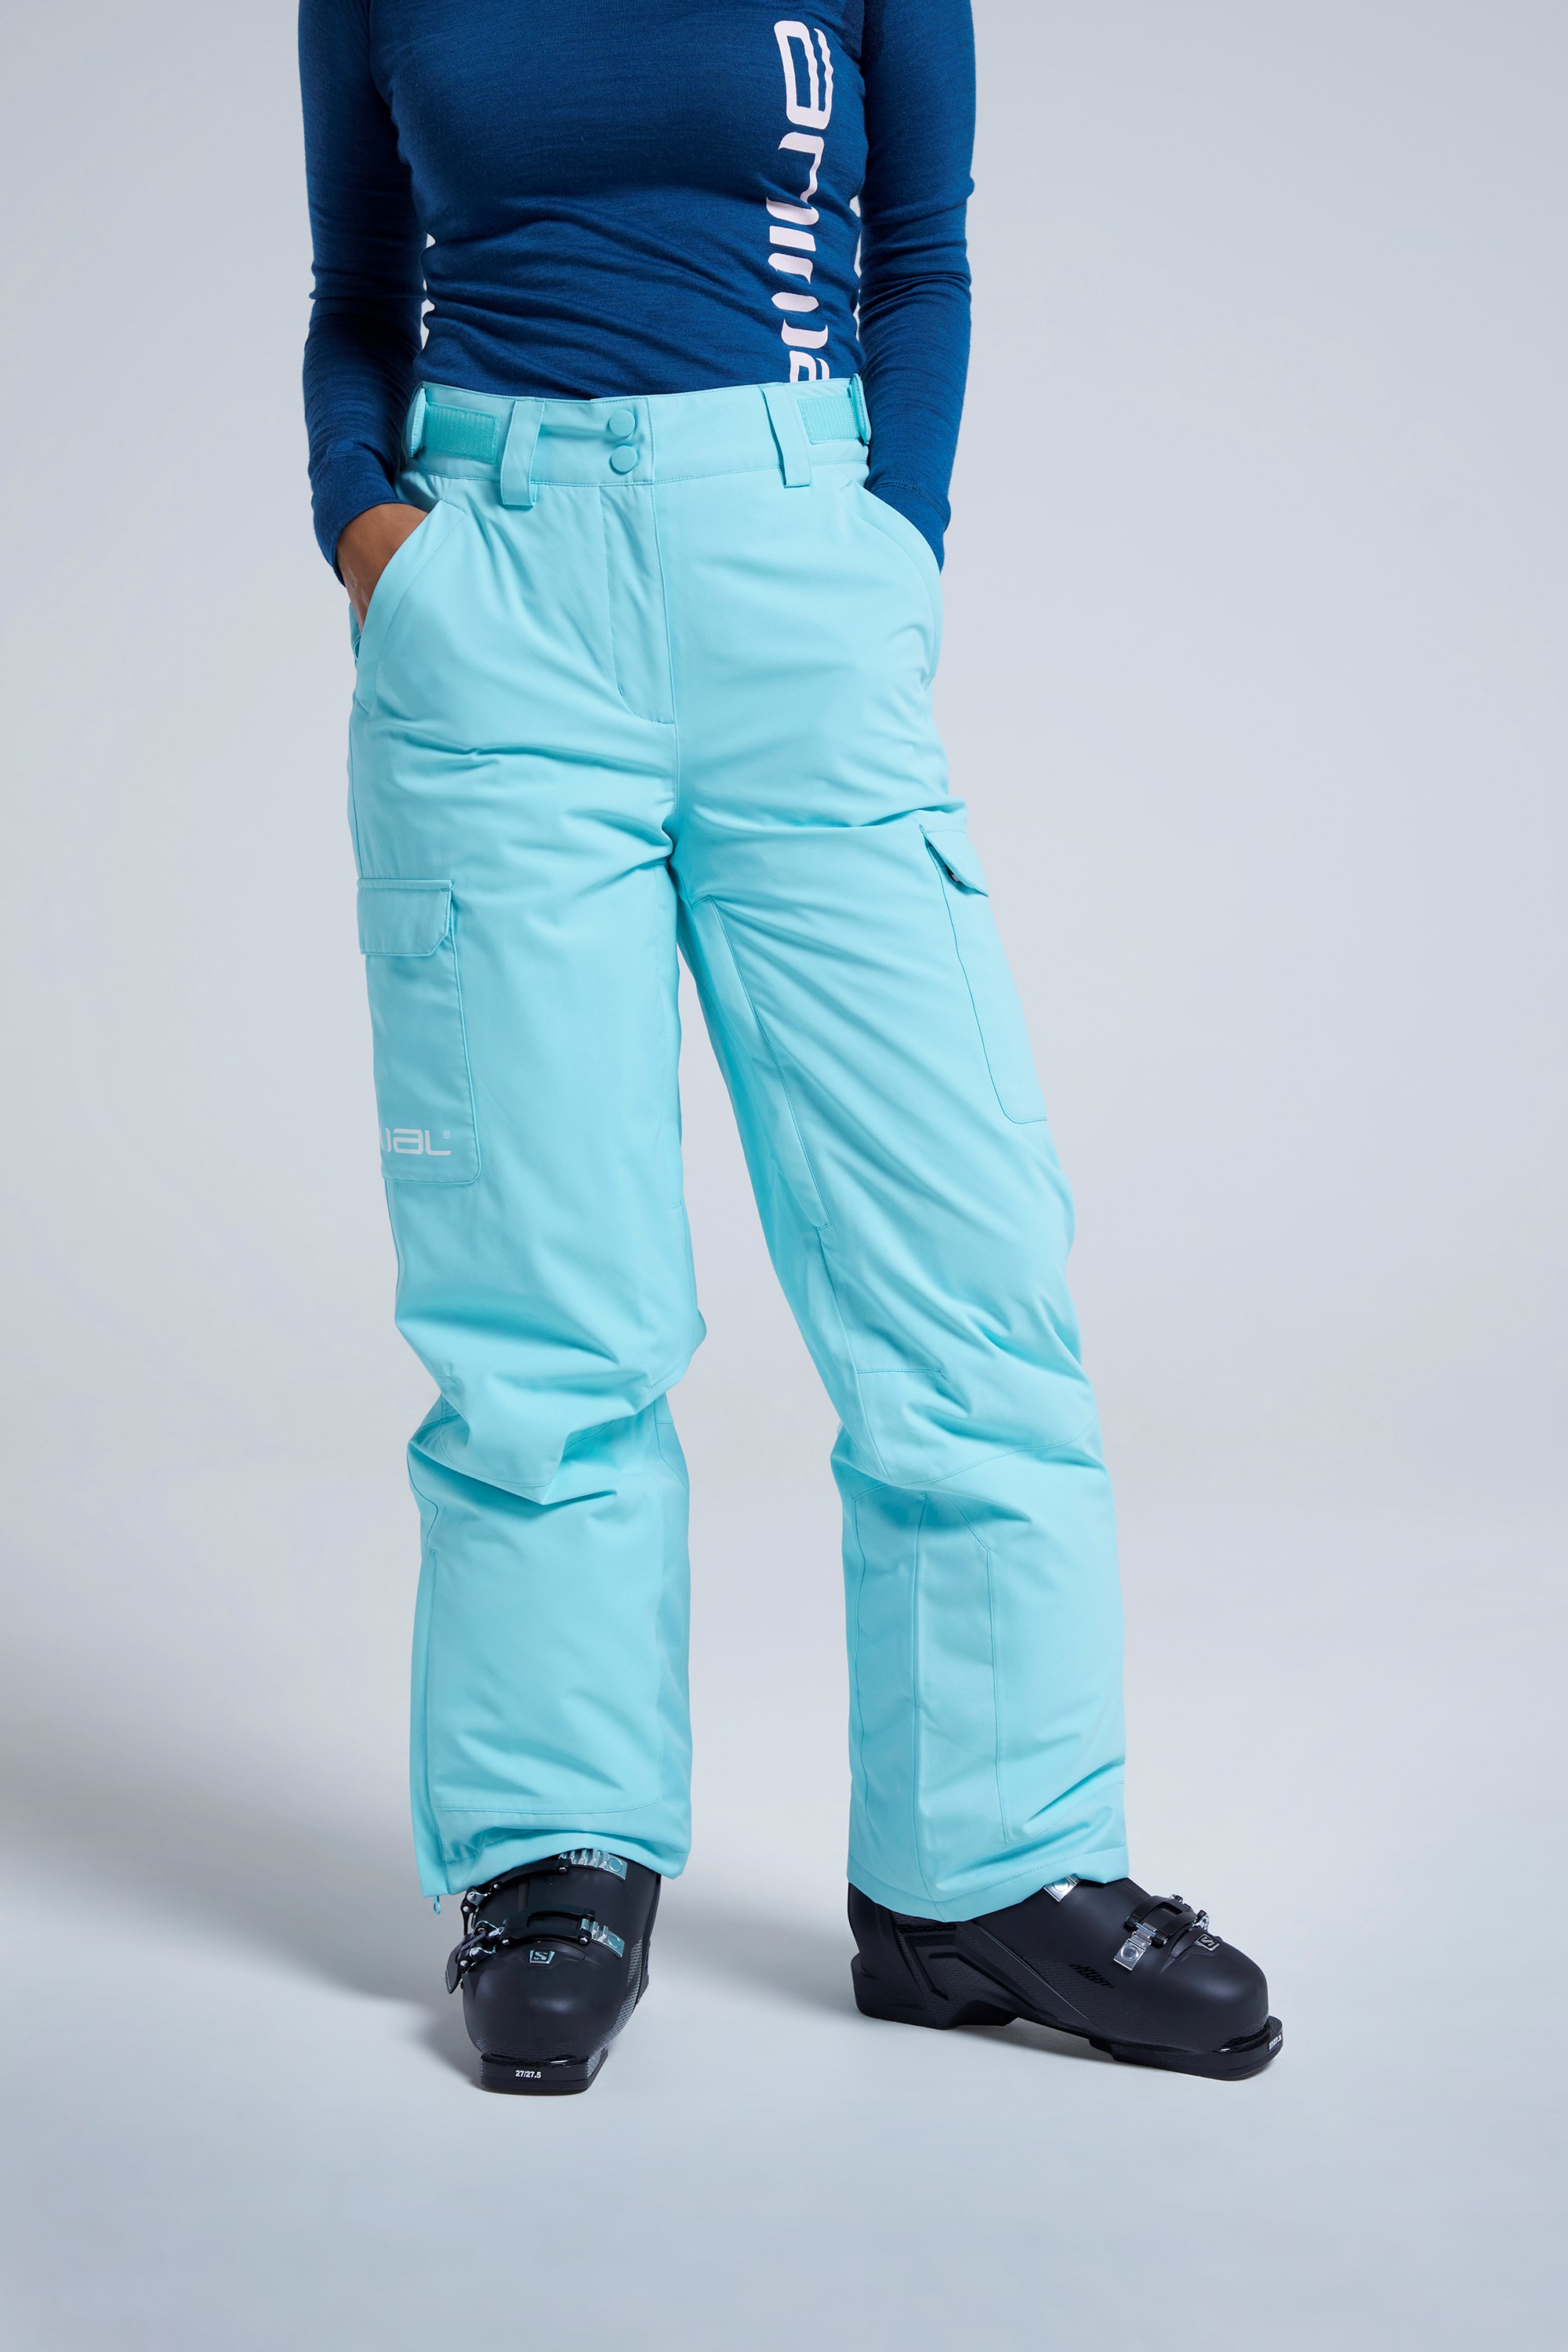 Women's EXP Waterproof Snow Pants, Assorted | Canadian Tire